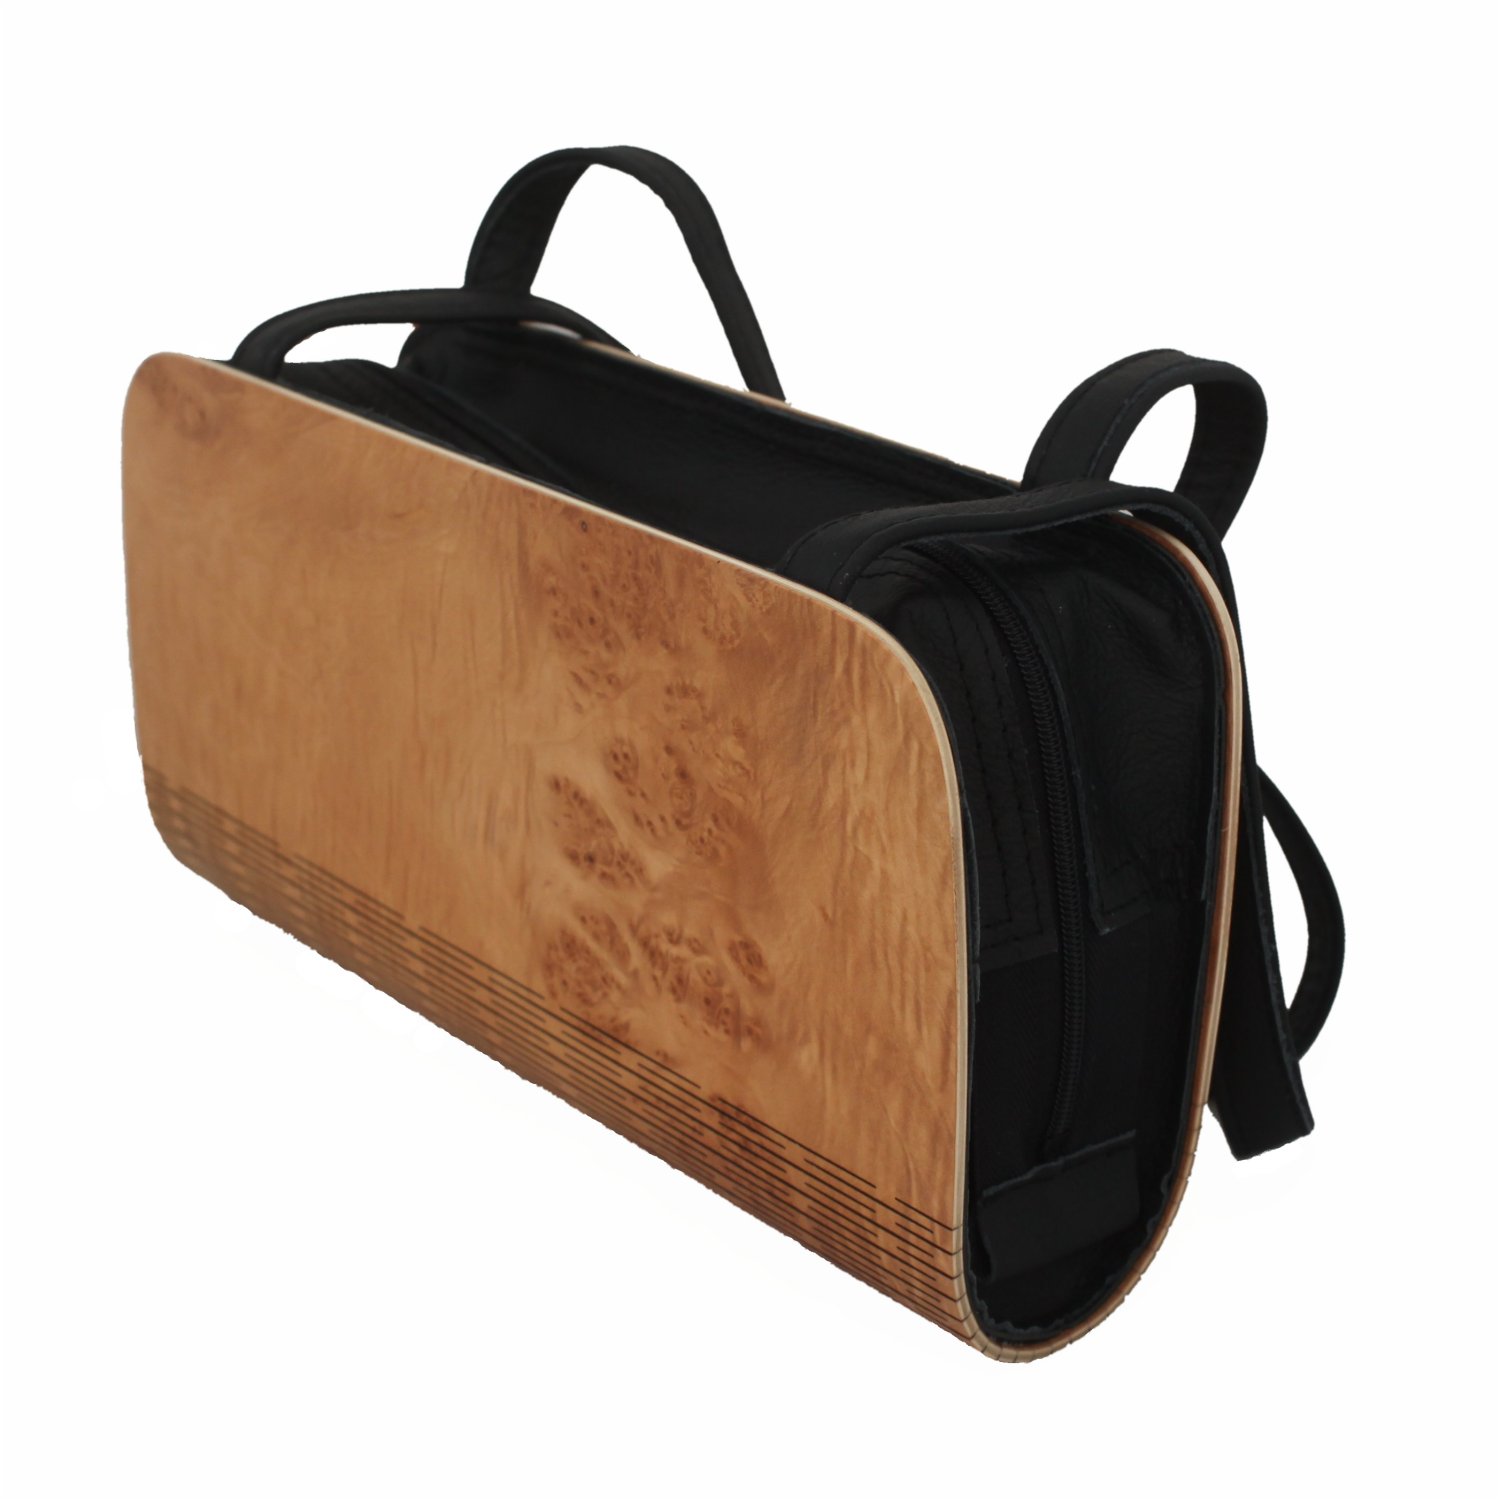 Holz-Fichtner handbag from maple wood